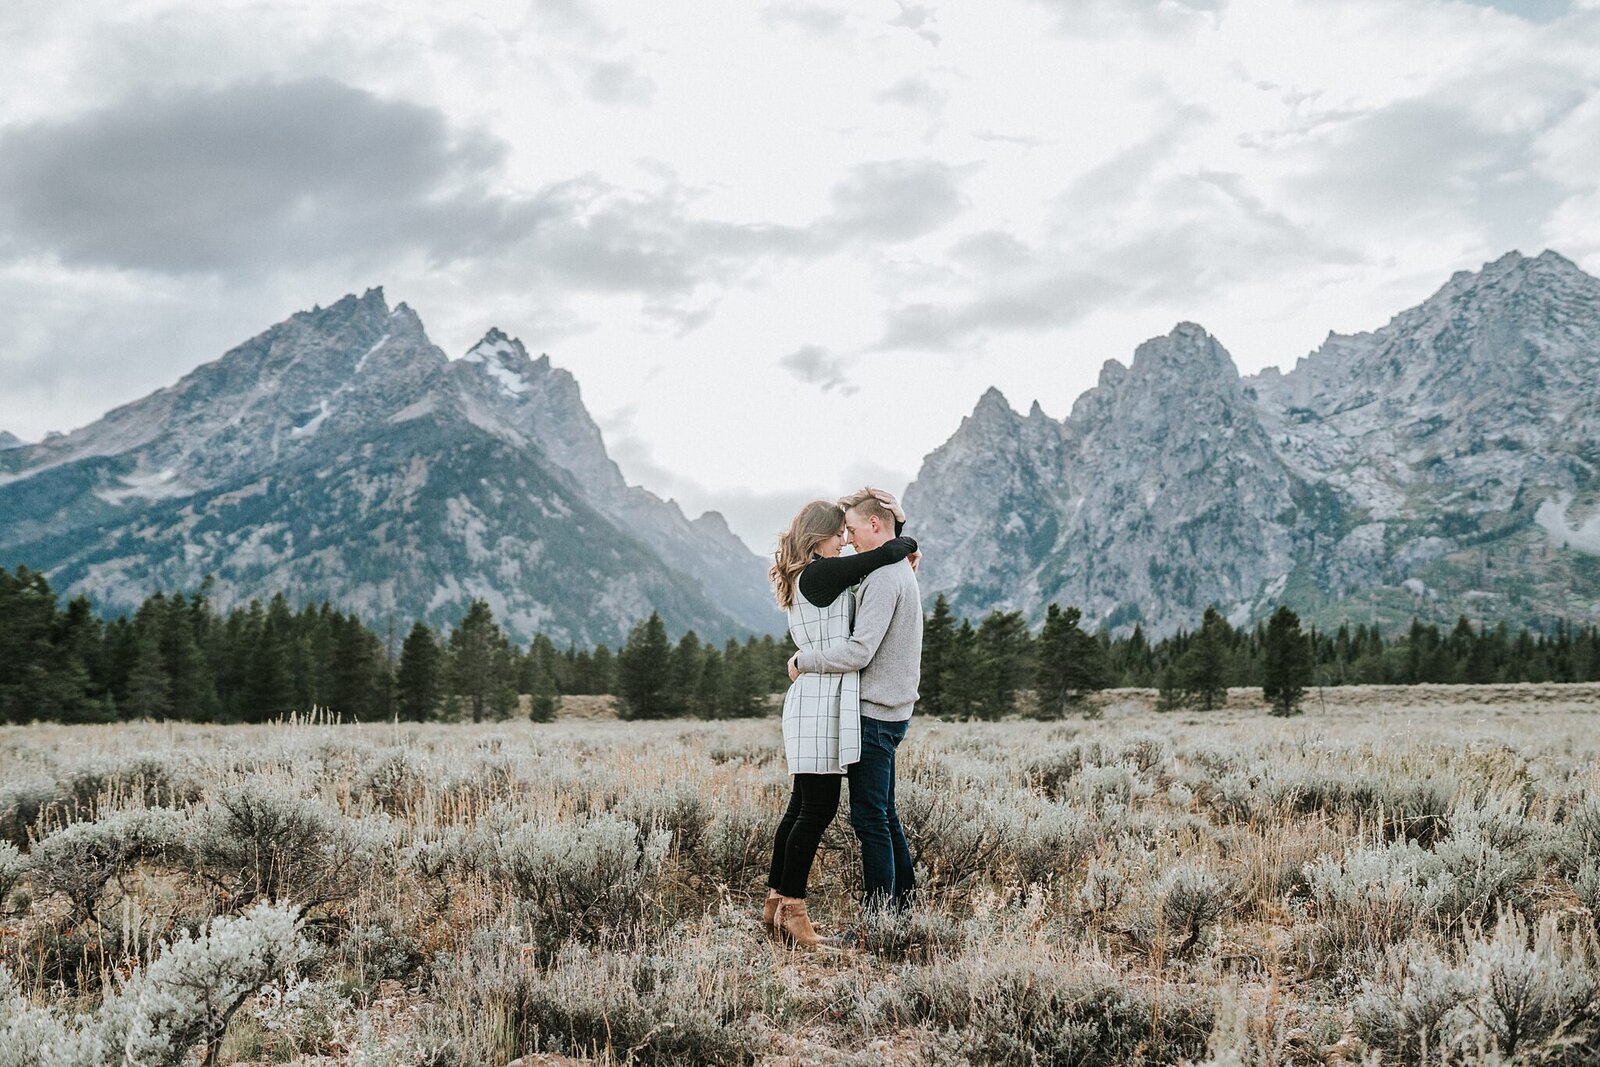 Lake Tahoe wedding photographer captures couple embracing during mountain engagements